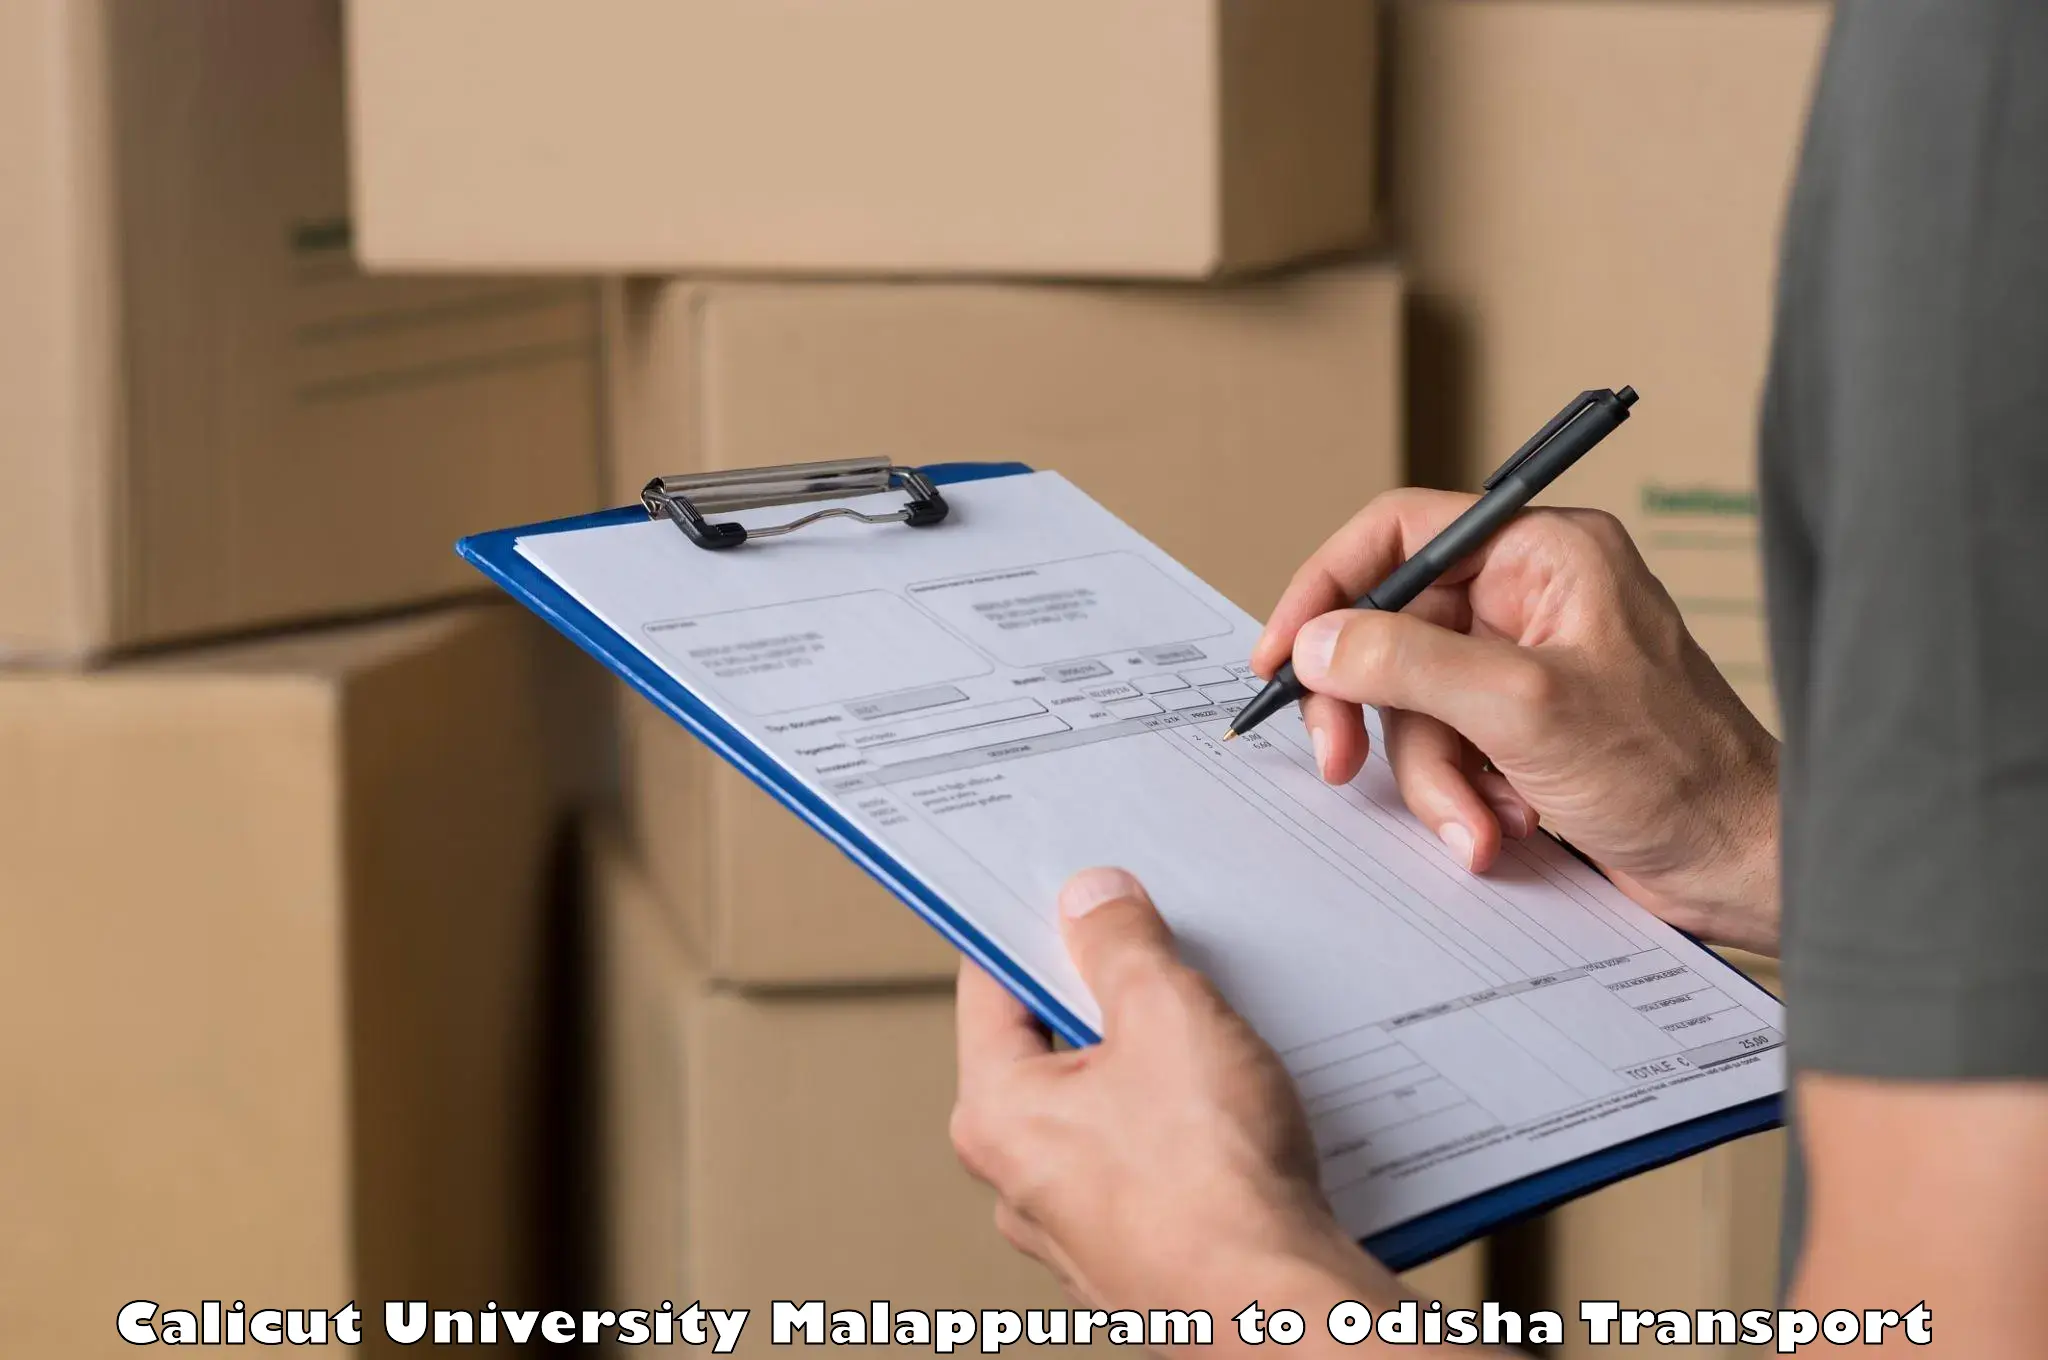 Container transportation services Calicut University Malappuram to Melchhamunda